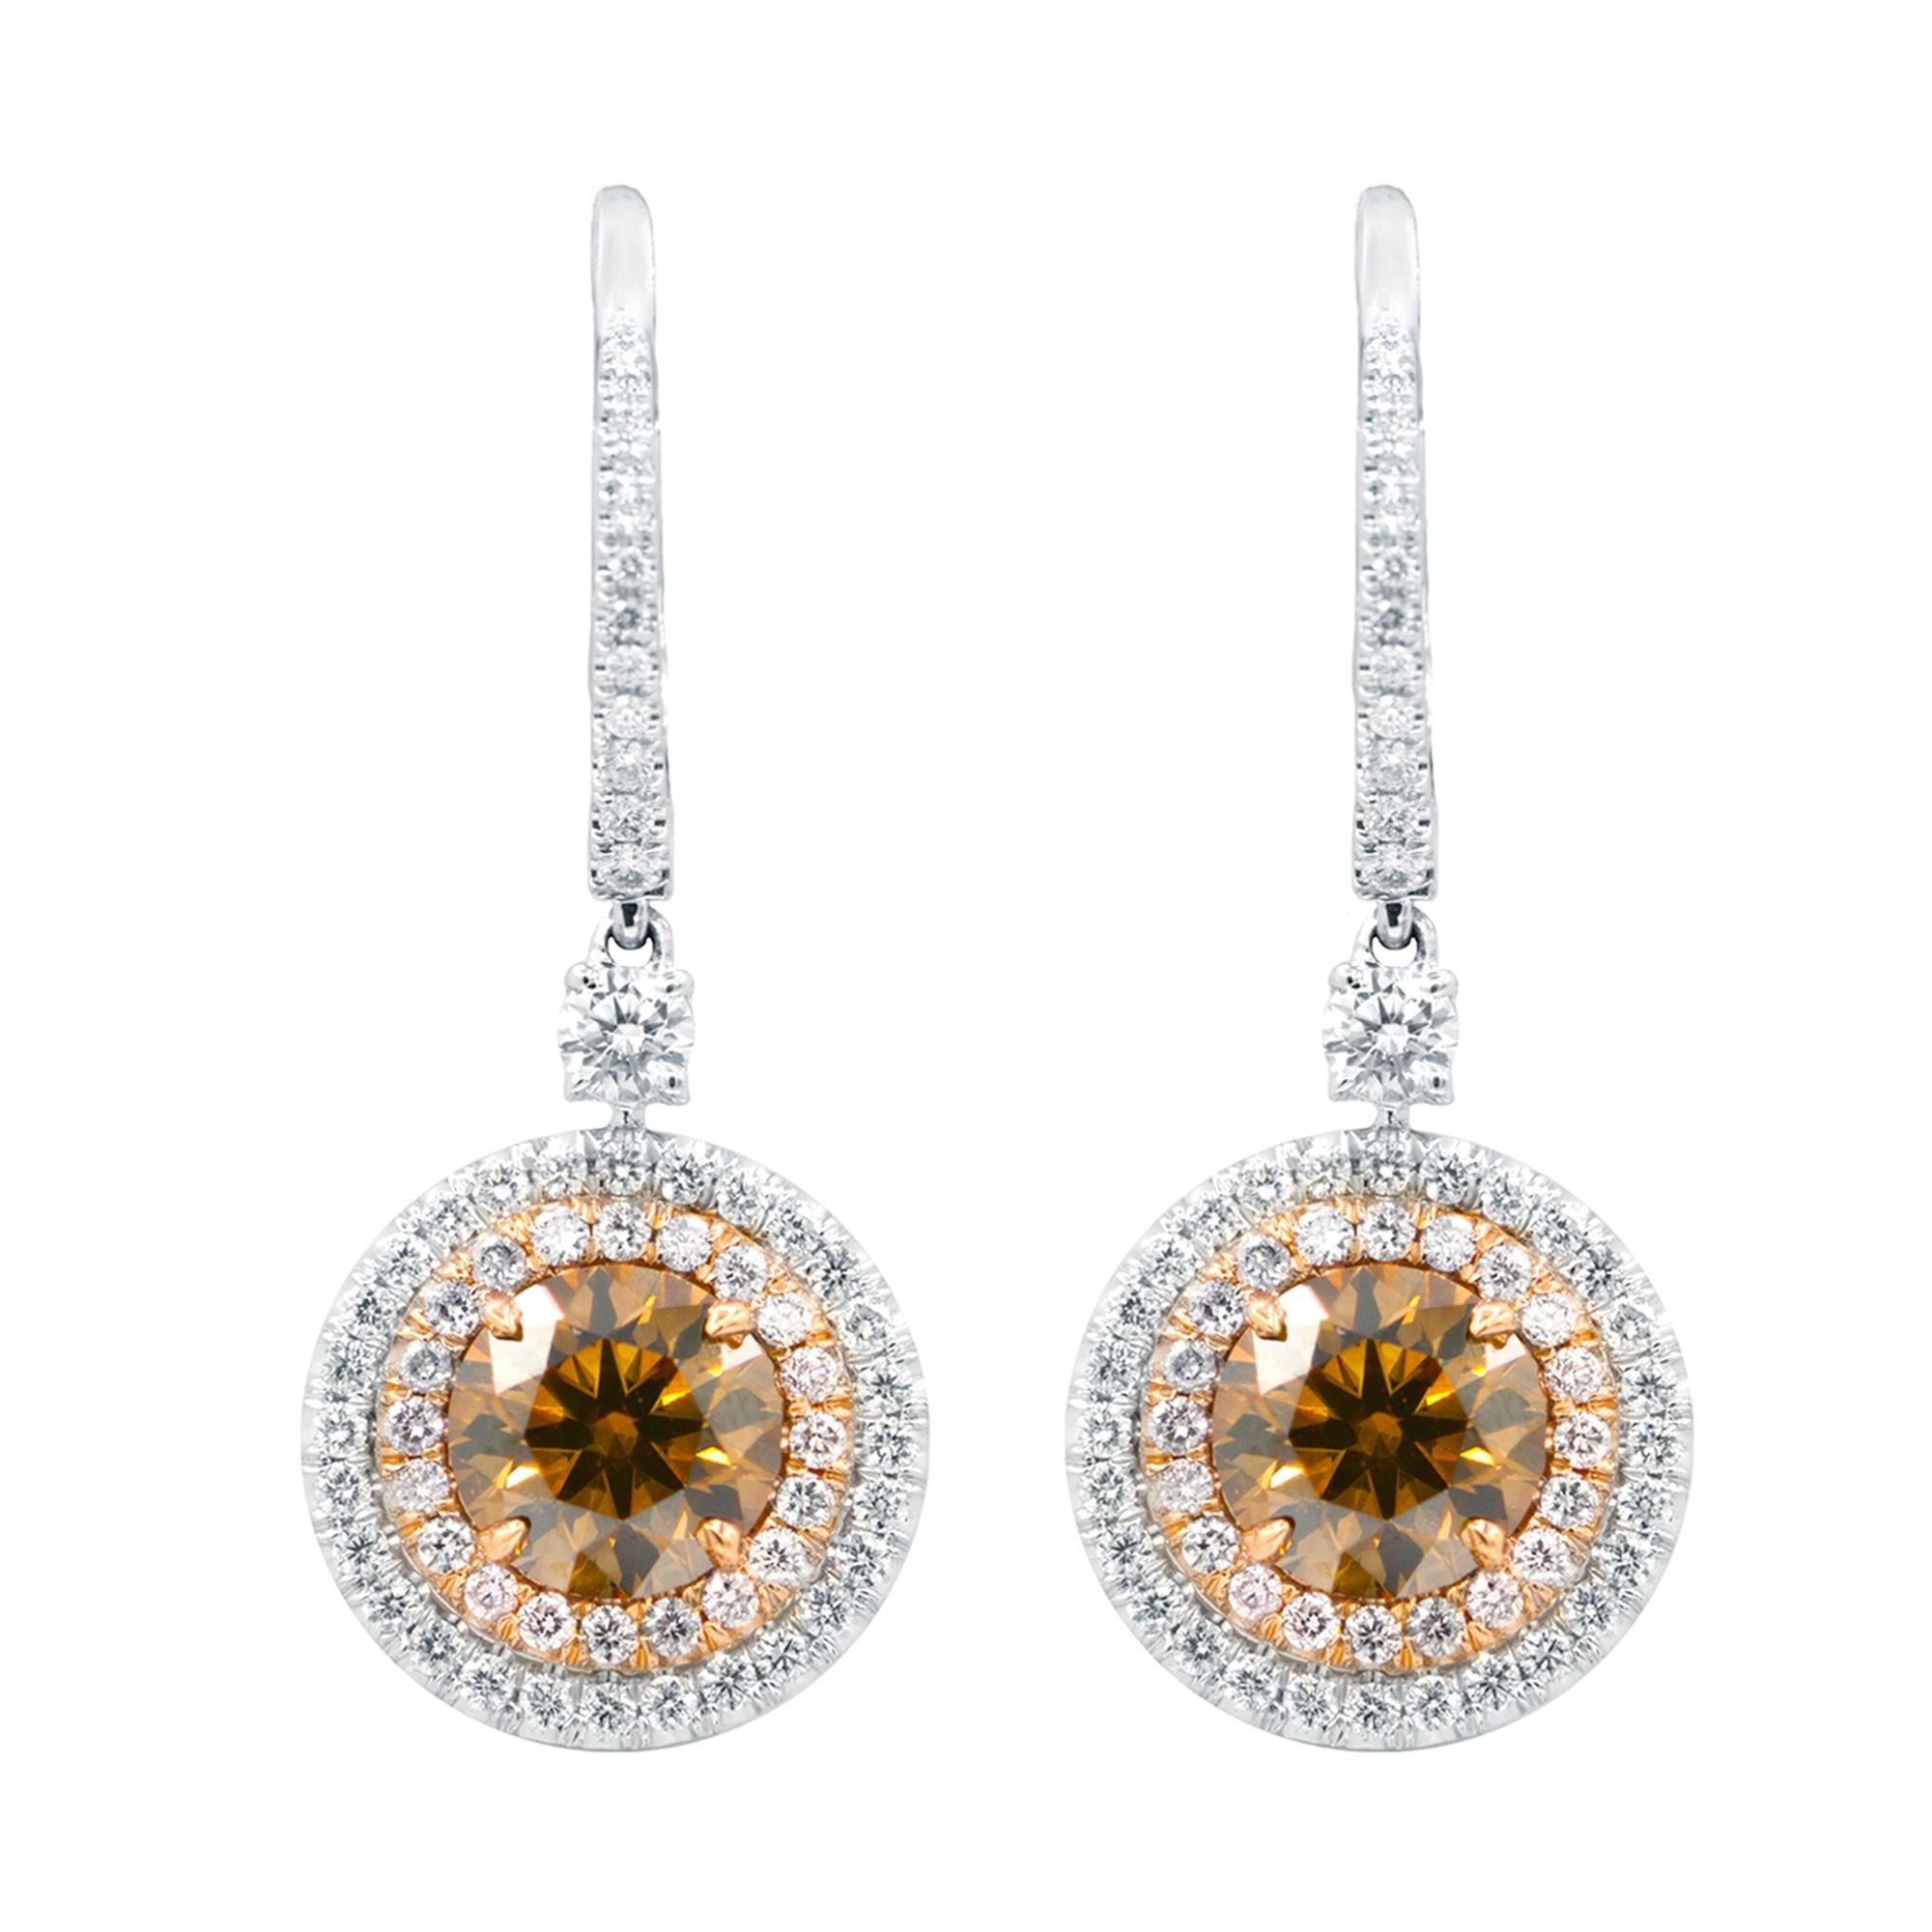 Diana M. Fine Jewelry 18k Two-Tone 4.02 Ct. tw. Diamond Earrings For Sale